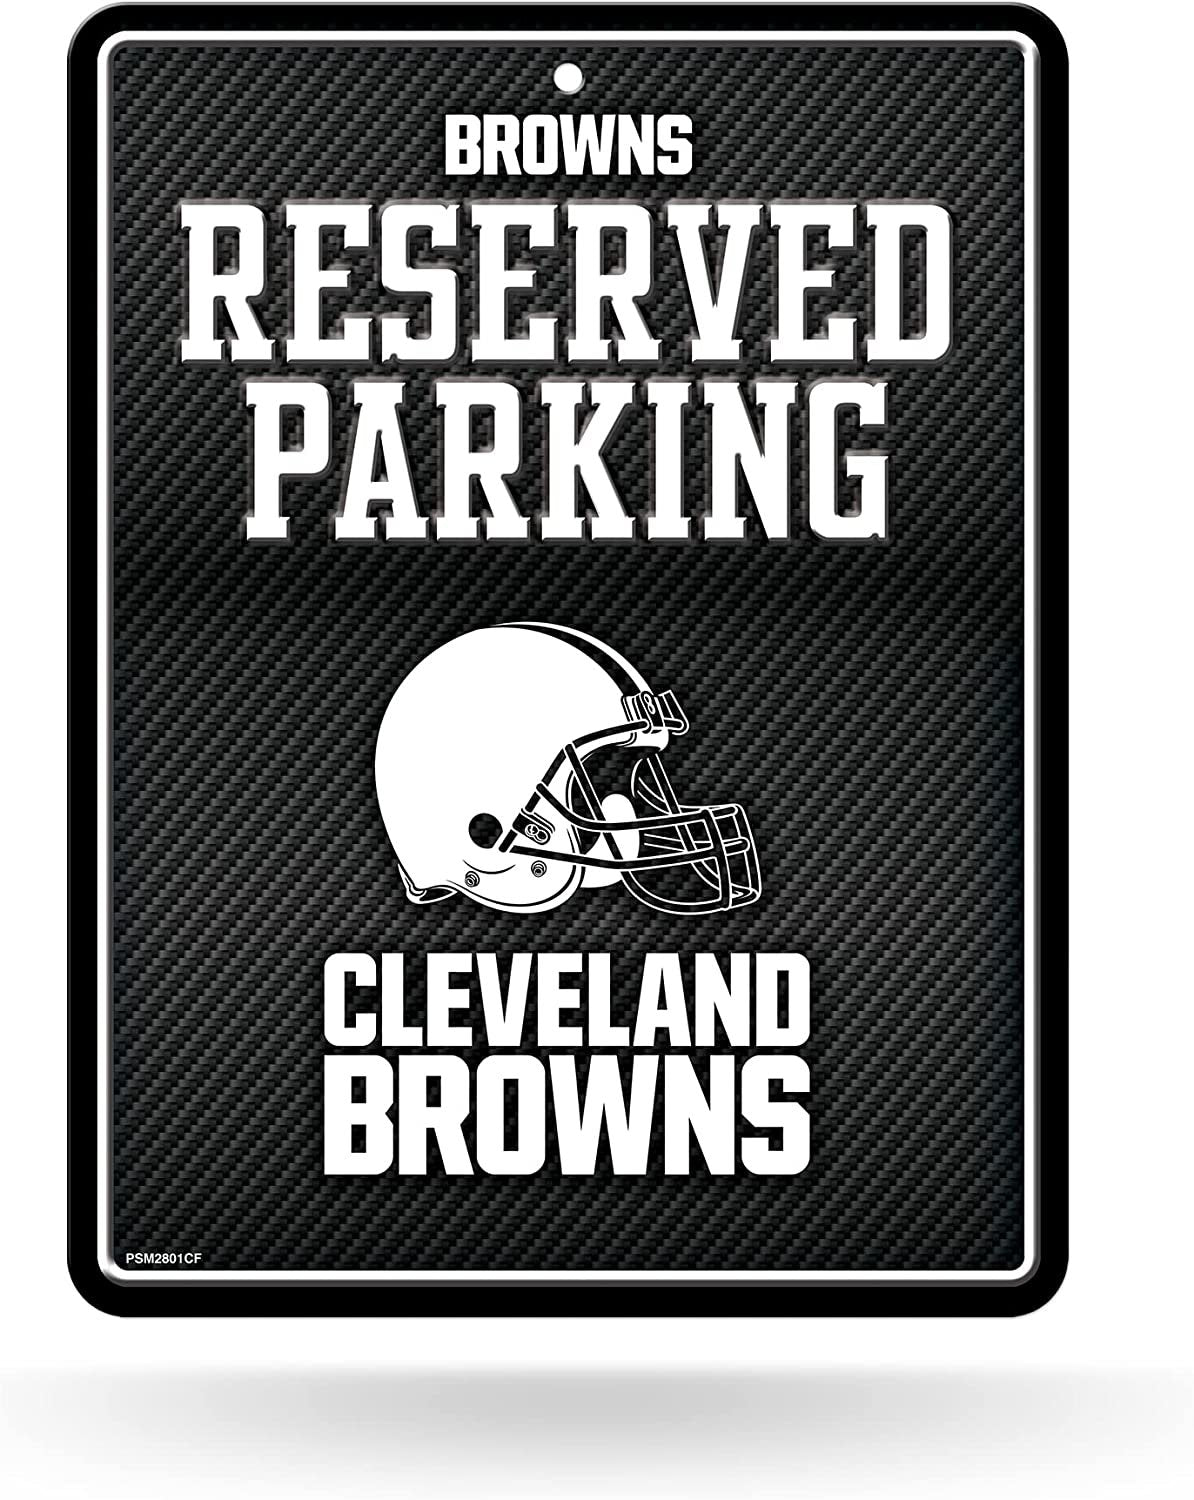 Cleveland Browns Metal Parking Novelty Wall Sign 8.5 x 11 Inch Carbon Fiber Design